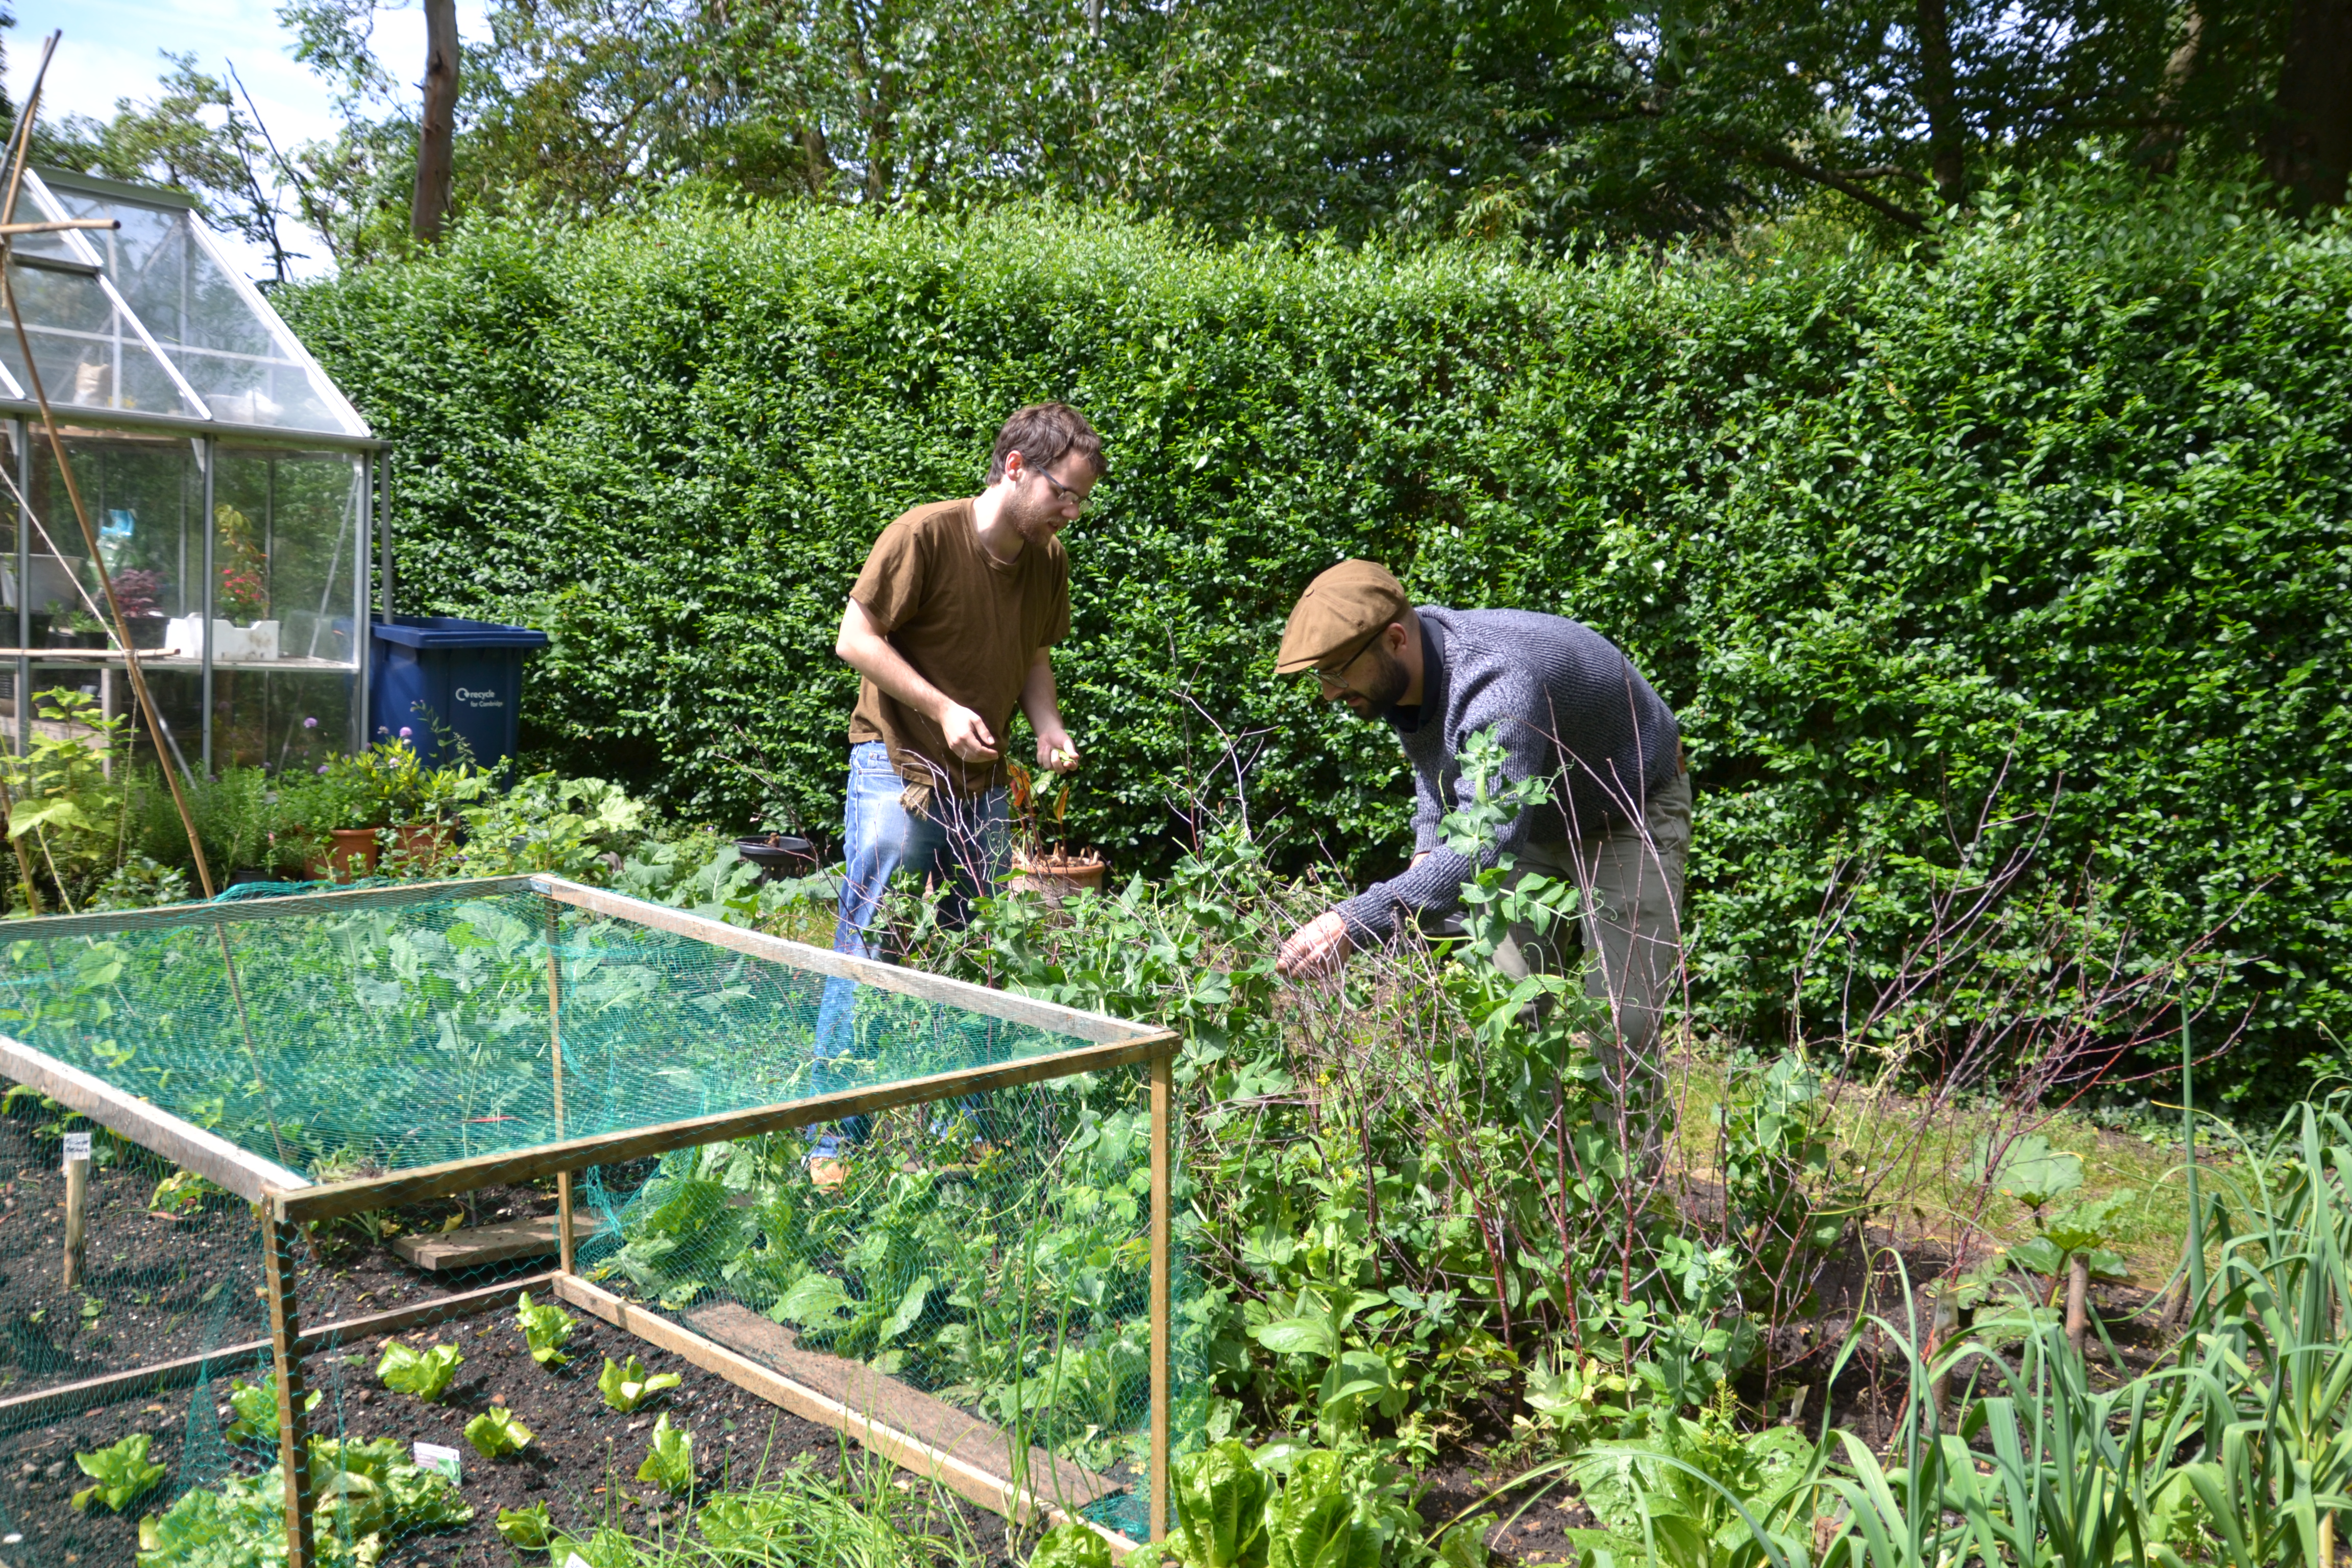 Harvesting in the student garden